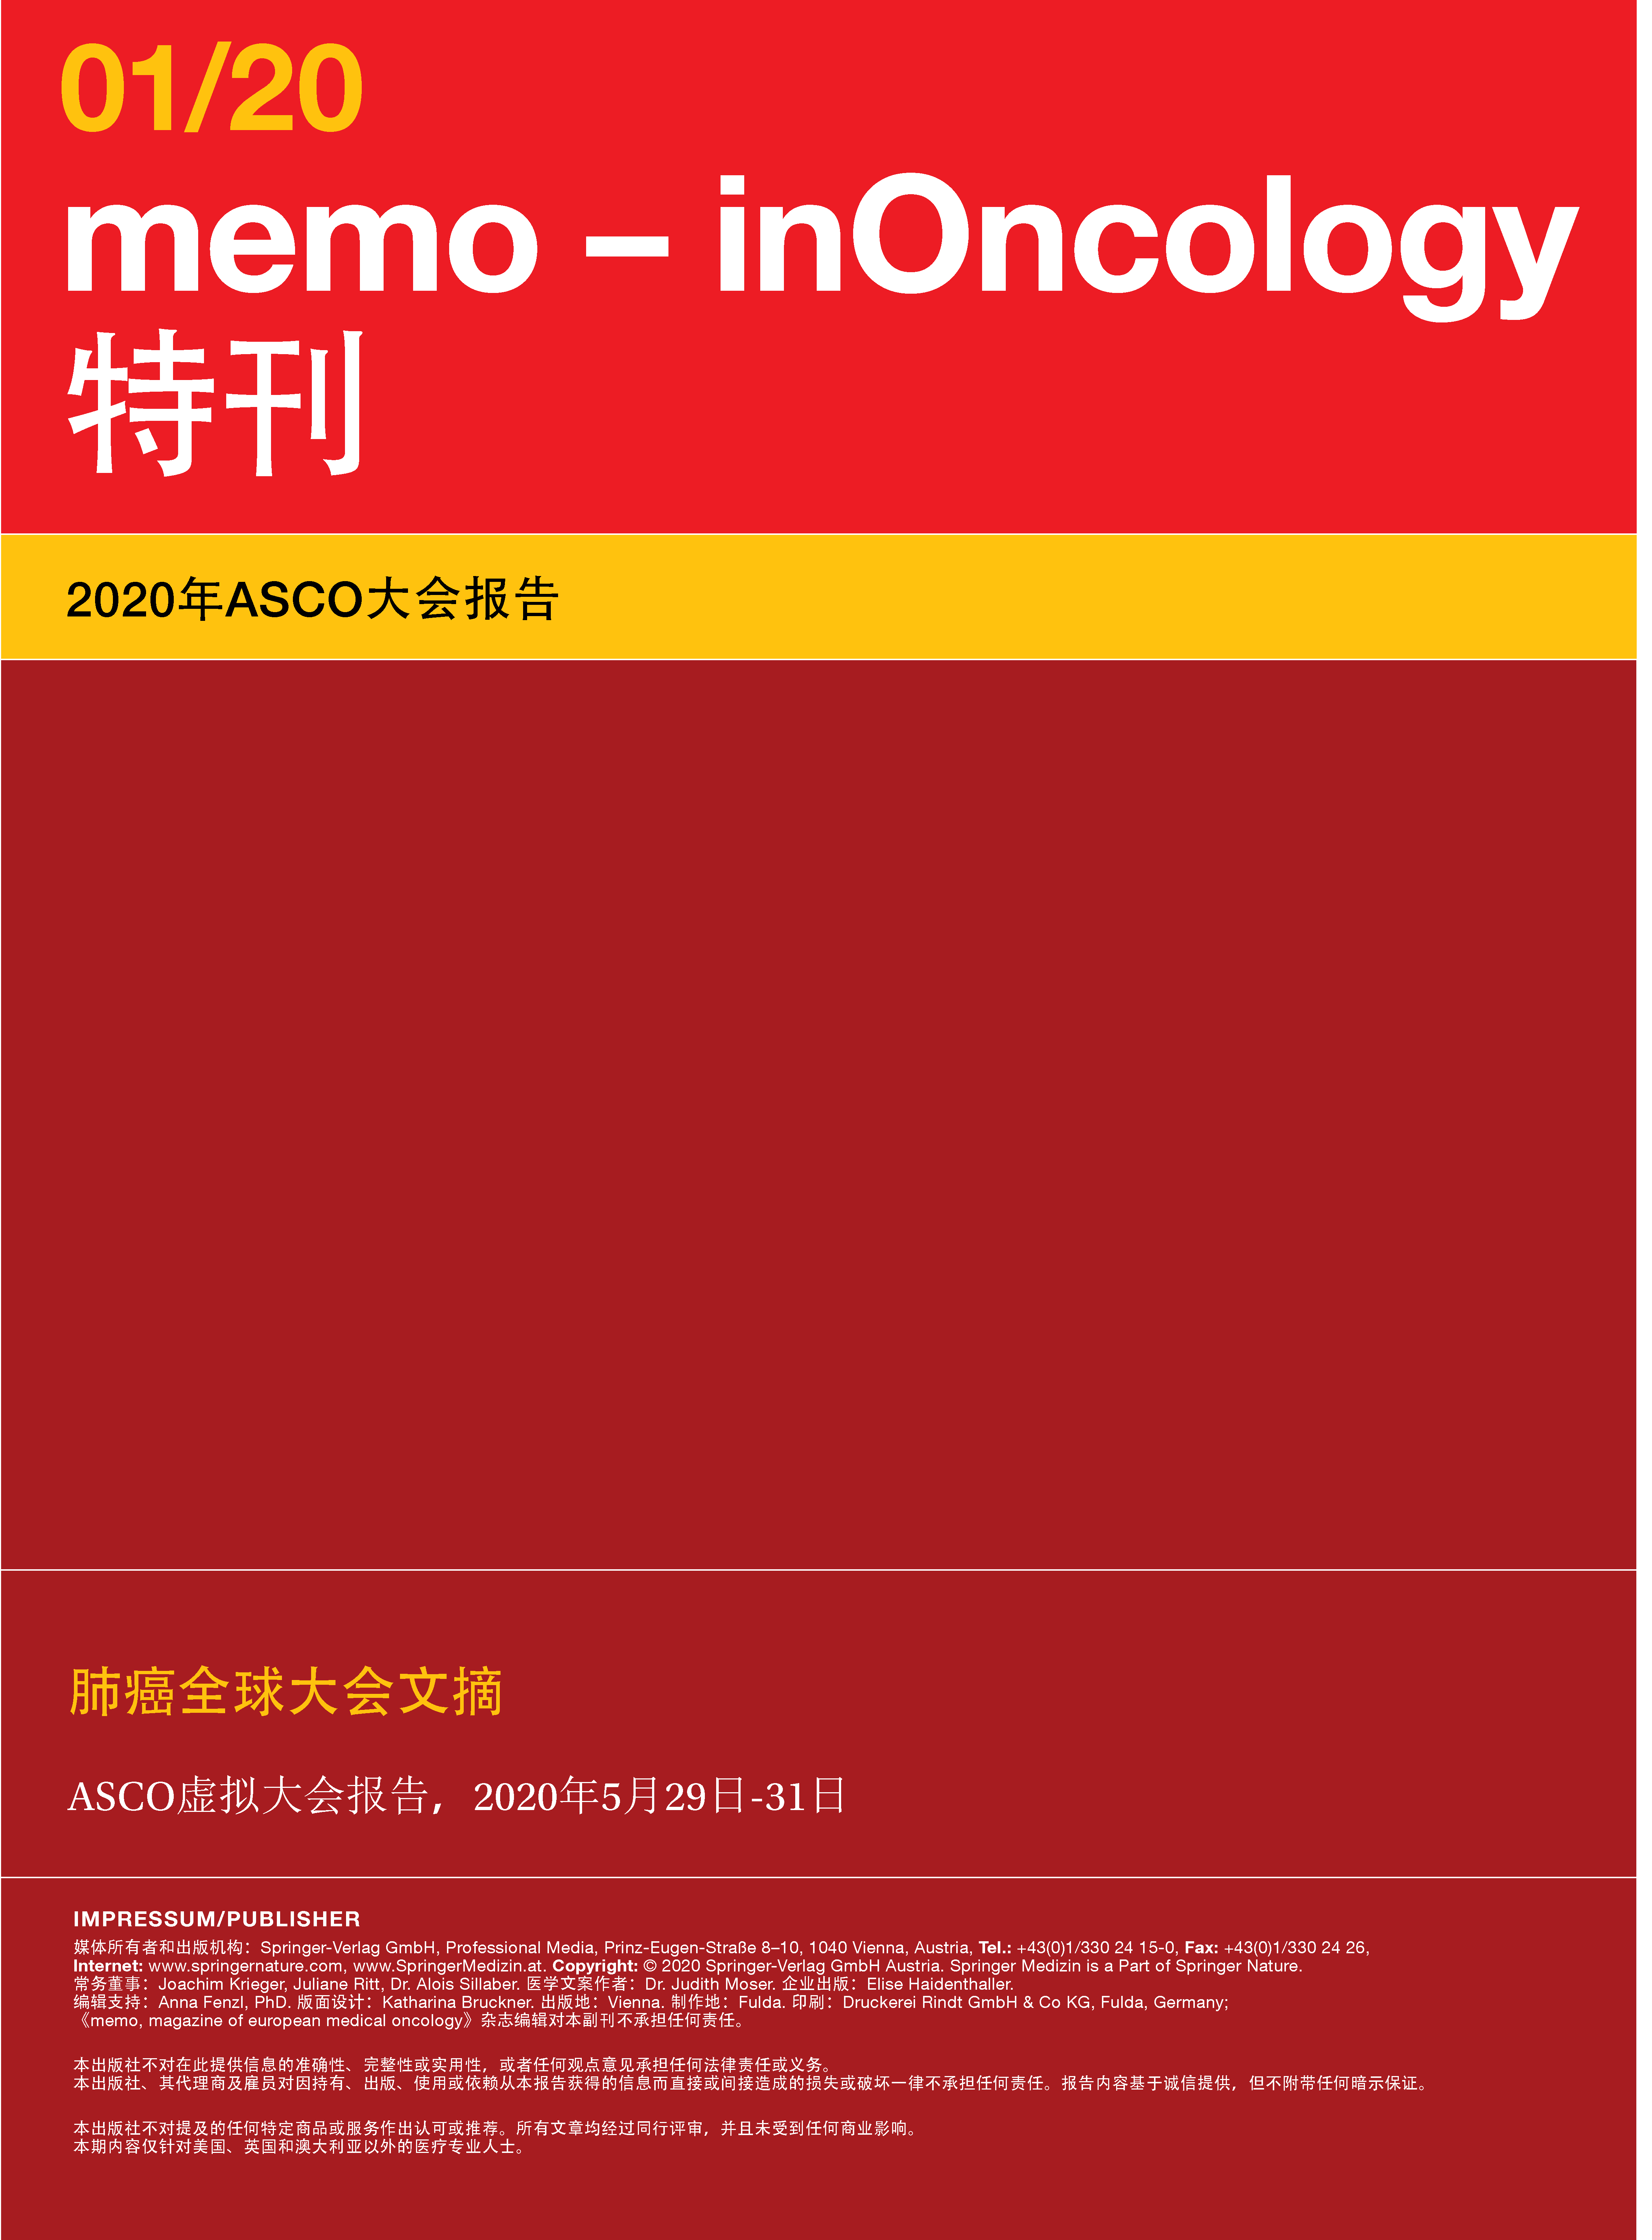 memo inOncology ASCO 2020 mandarin